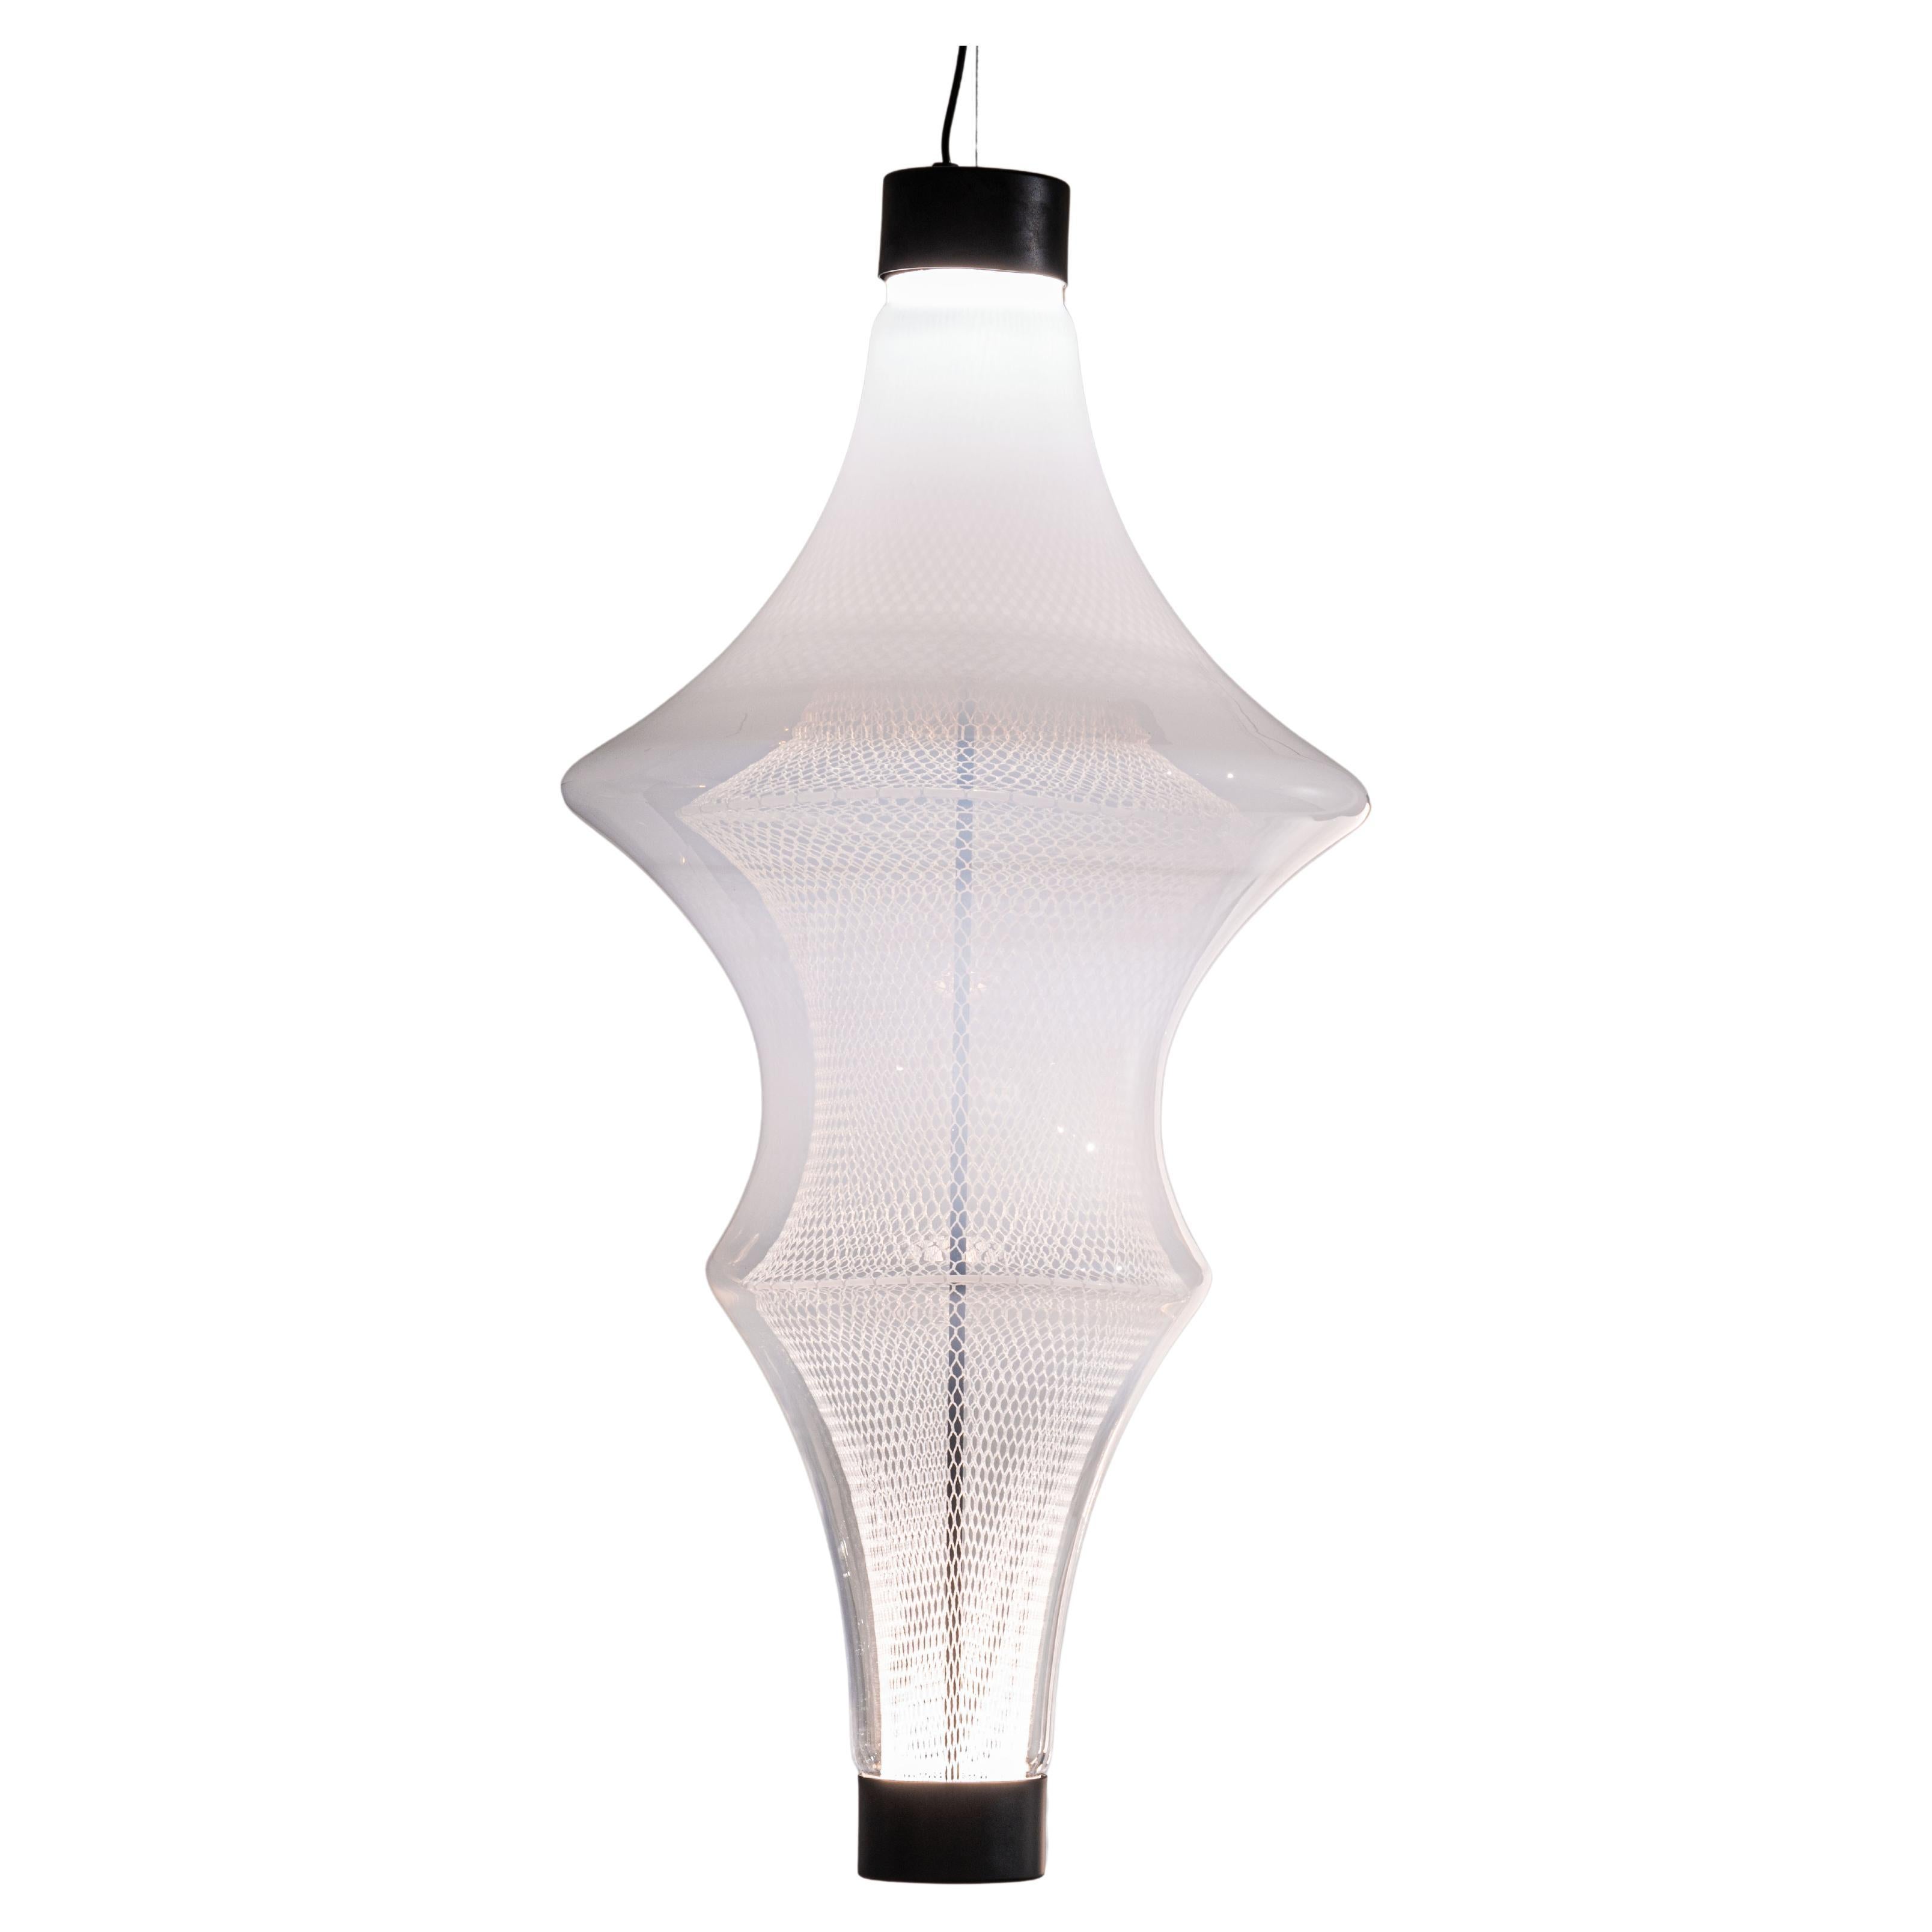 Nasse 02 Large by Marco Zito & BTM - Lampe pendante en verre soufflé de Murano